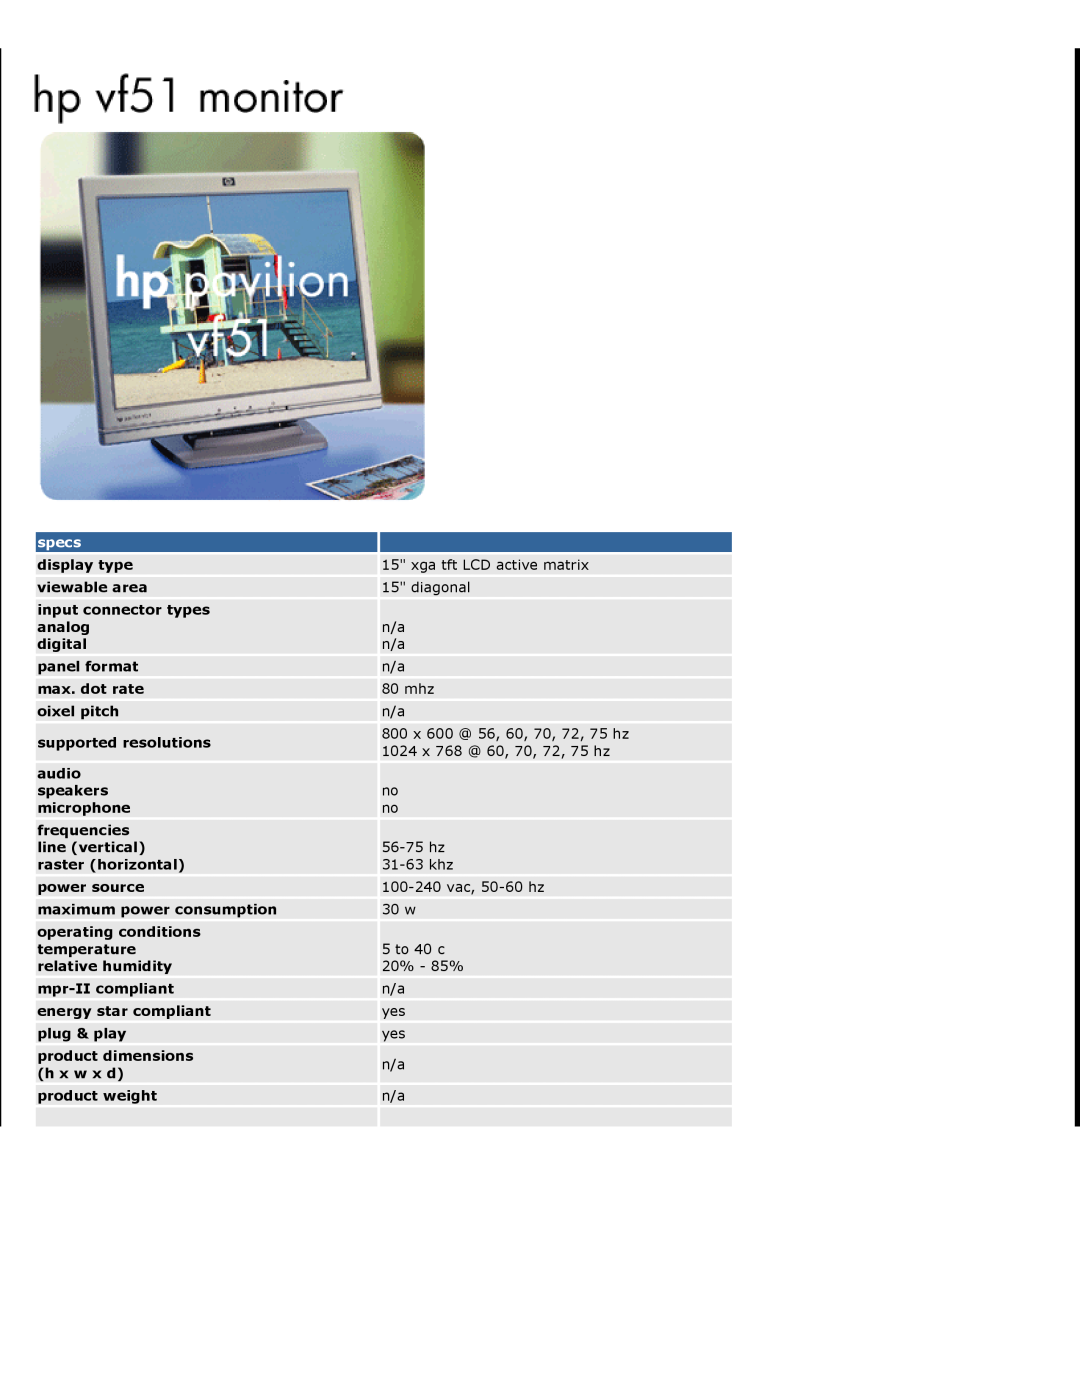 HP m703c 17 inch Bulk CRT, vf51 15 inch manual Hewlett-Packard Limited Warranty Statement, HP Pavilion Multimedia Display 